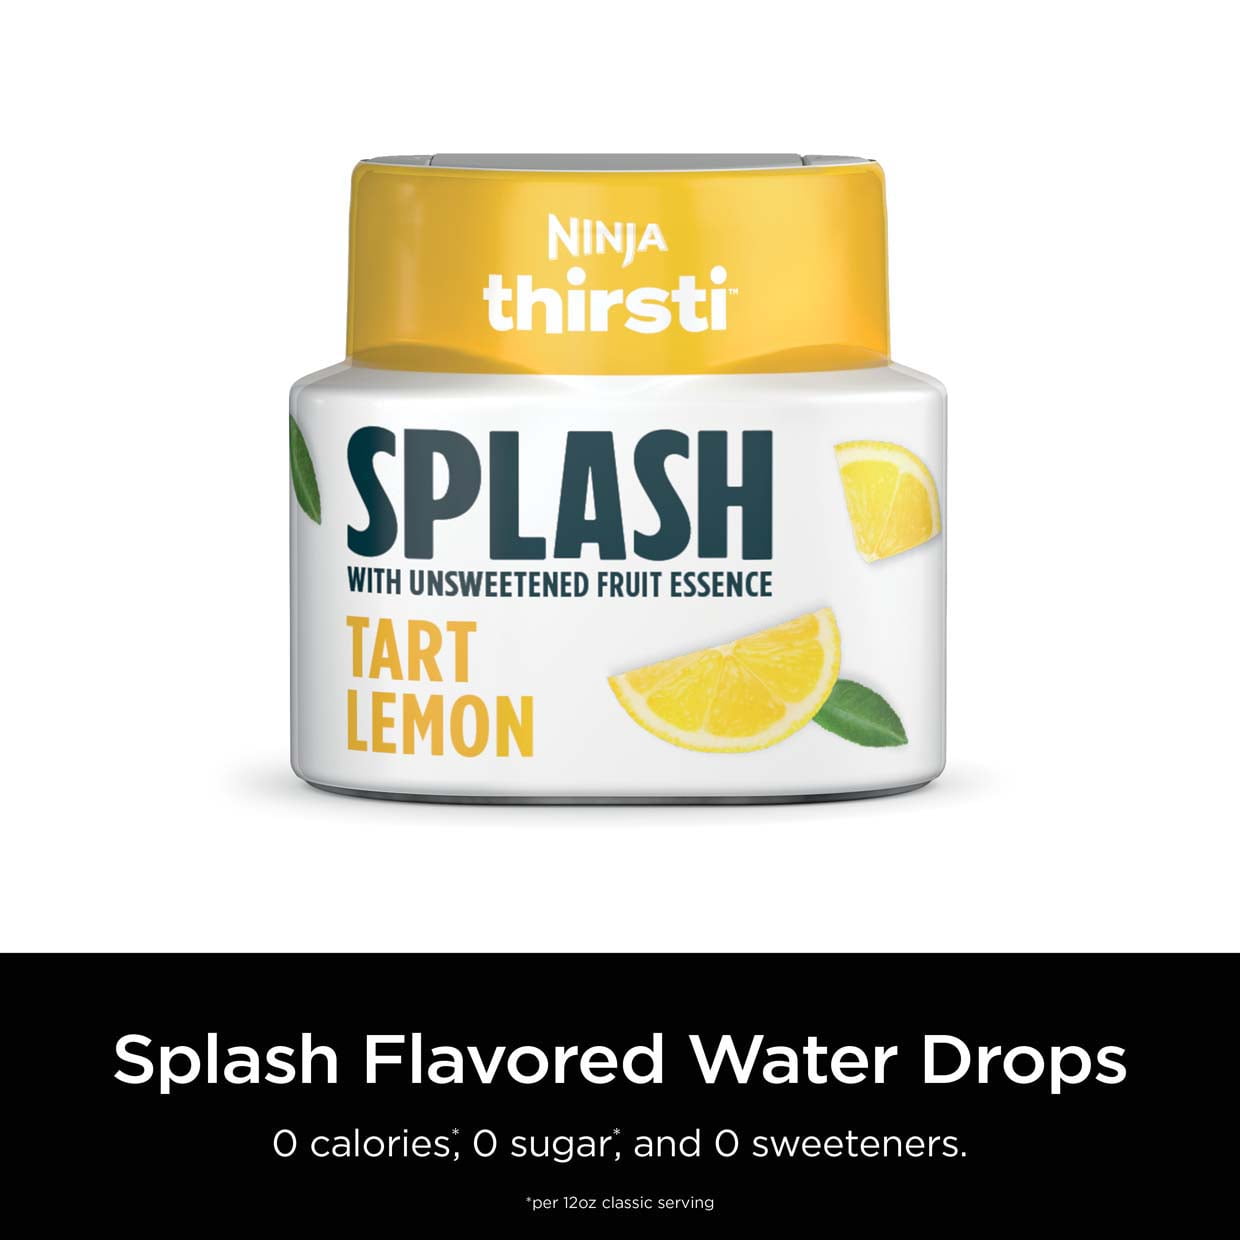 Ninja Thirsti Splash Flavored Water Drops - Unsweetened ,Tart Lemon